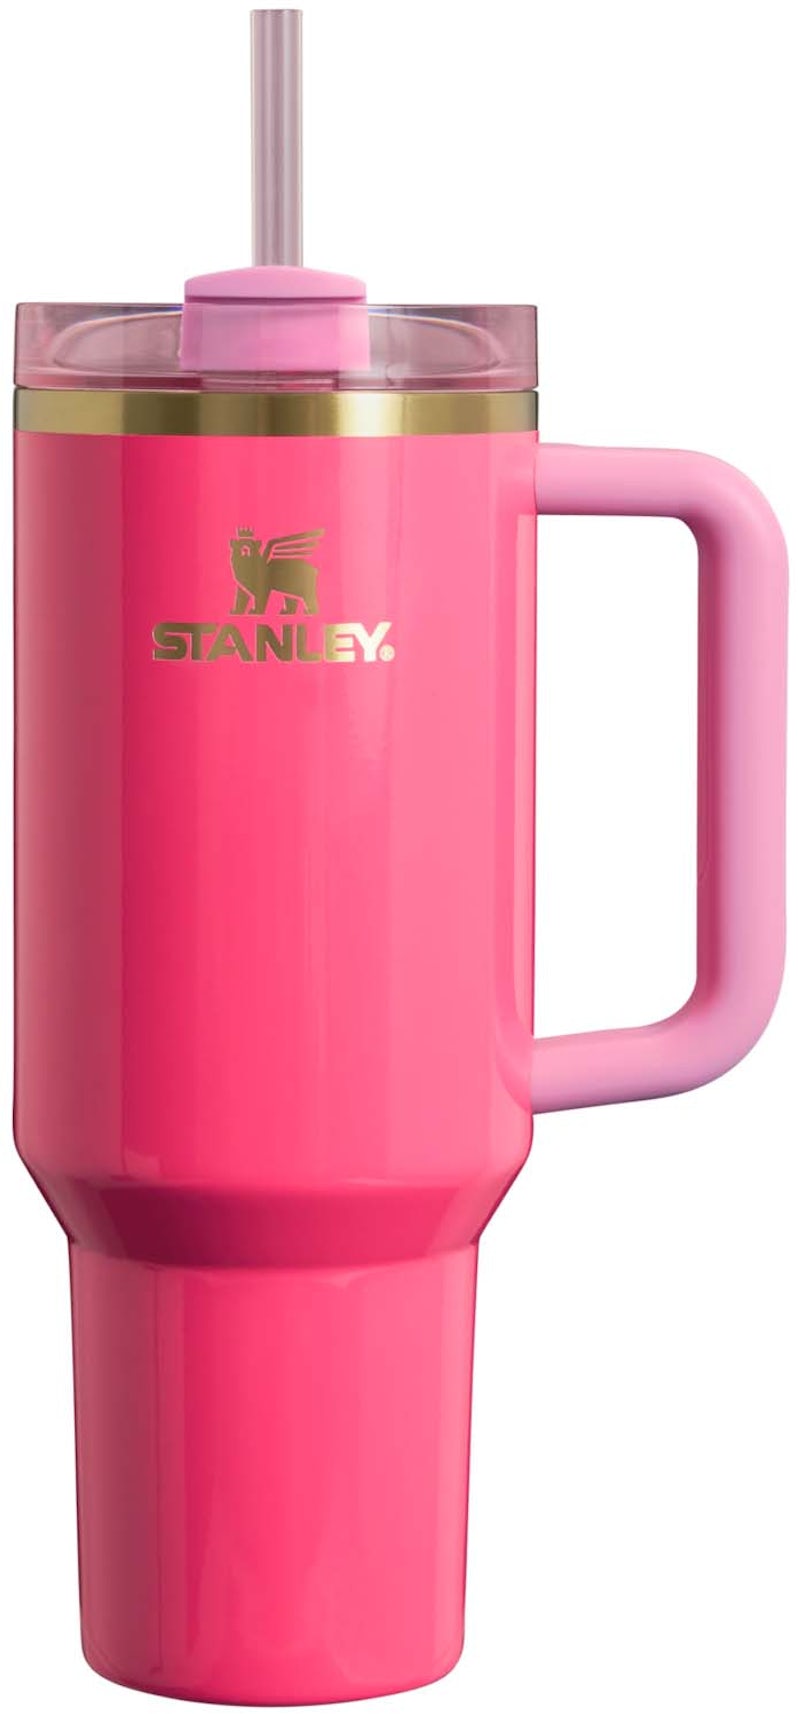 Stanley 40oz Camelia hot pink tumbler. Brand new no